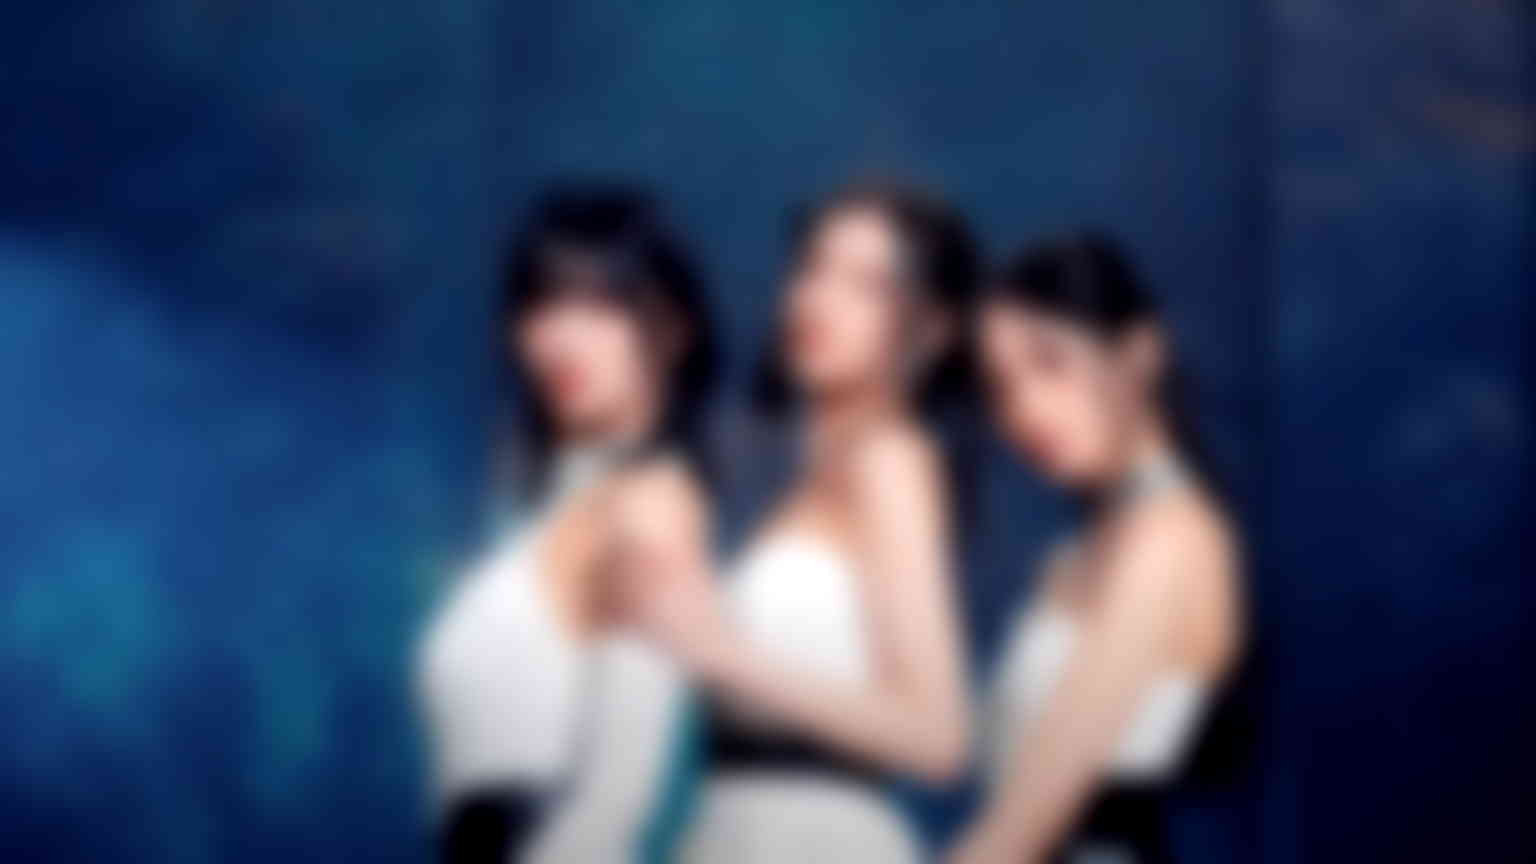 TWICE J-line subunit MISAMO release debut album